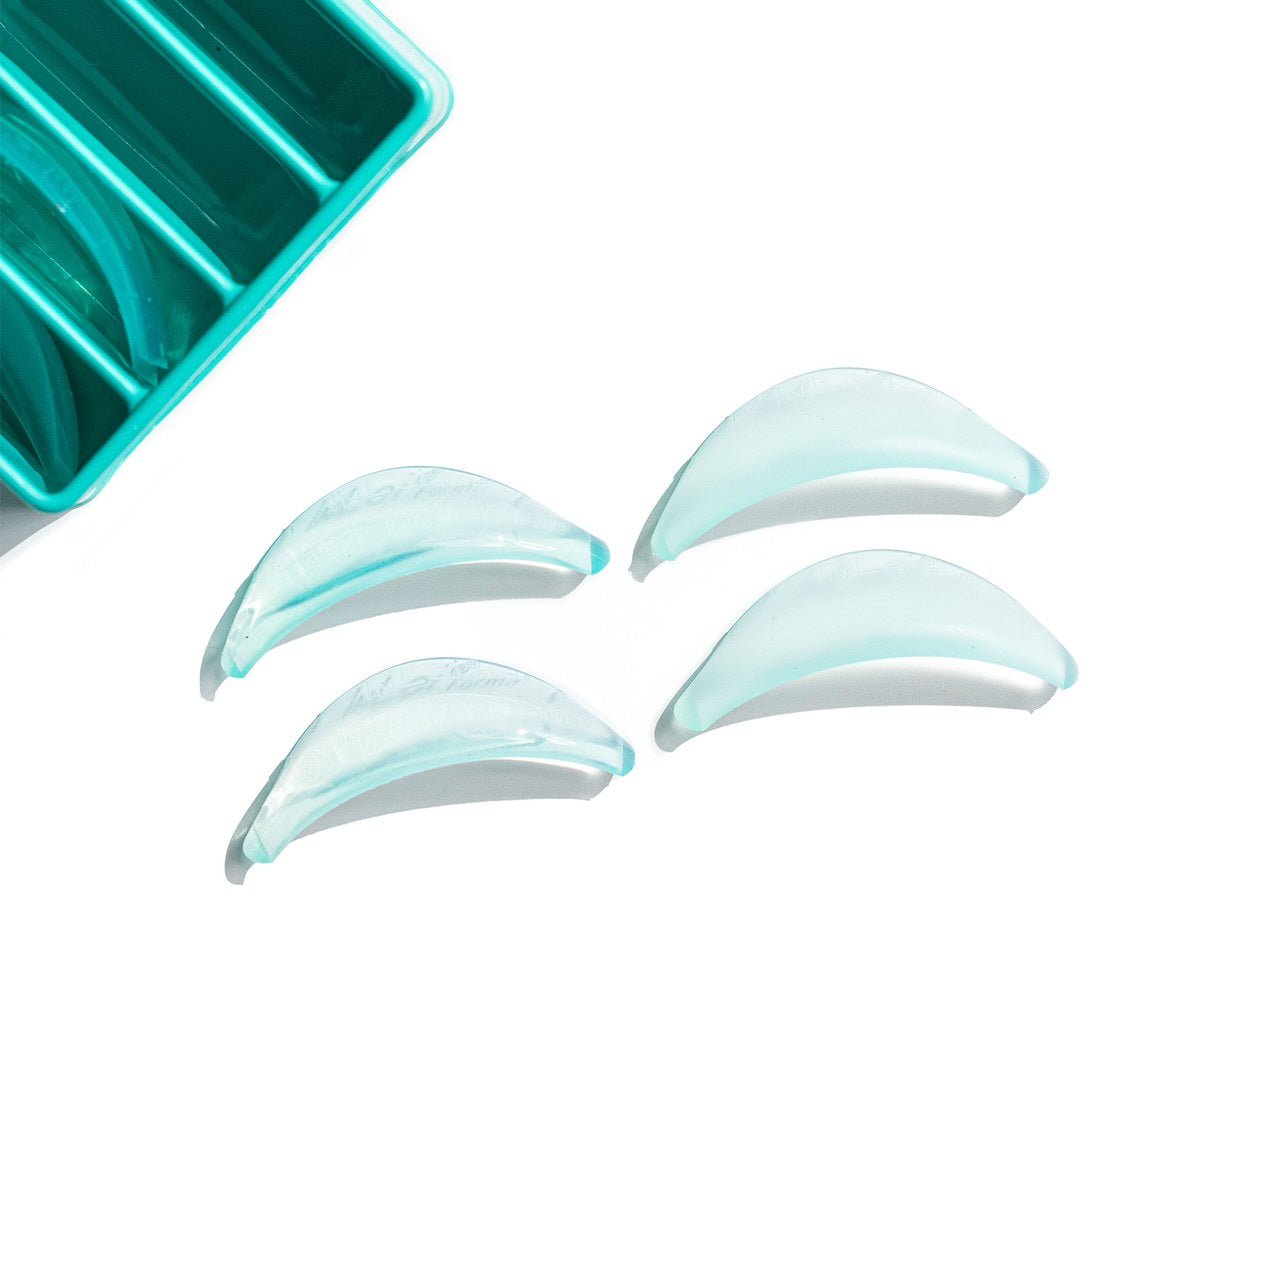 InLei's New Forma Shield: The Universal Intermediate Lash Lifting Shield for All Eye Shapes - inlei.com